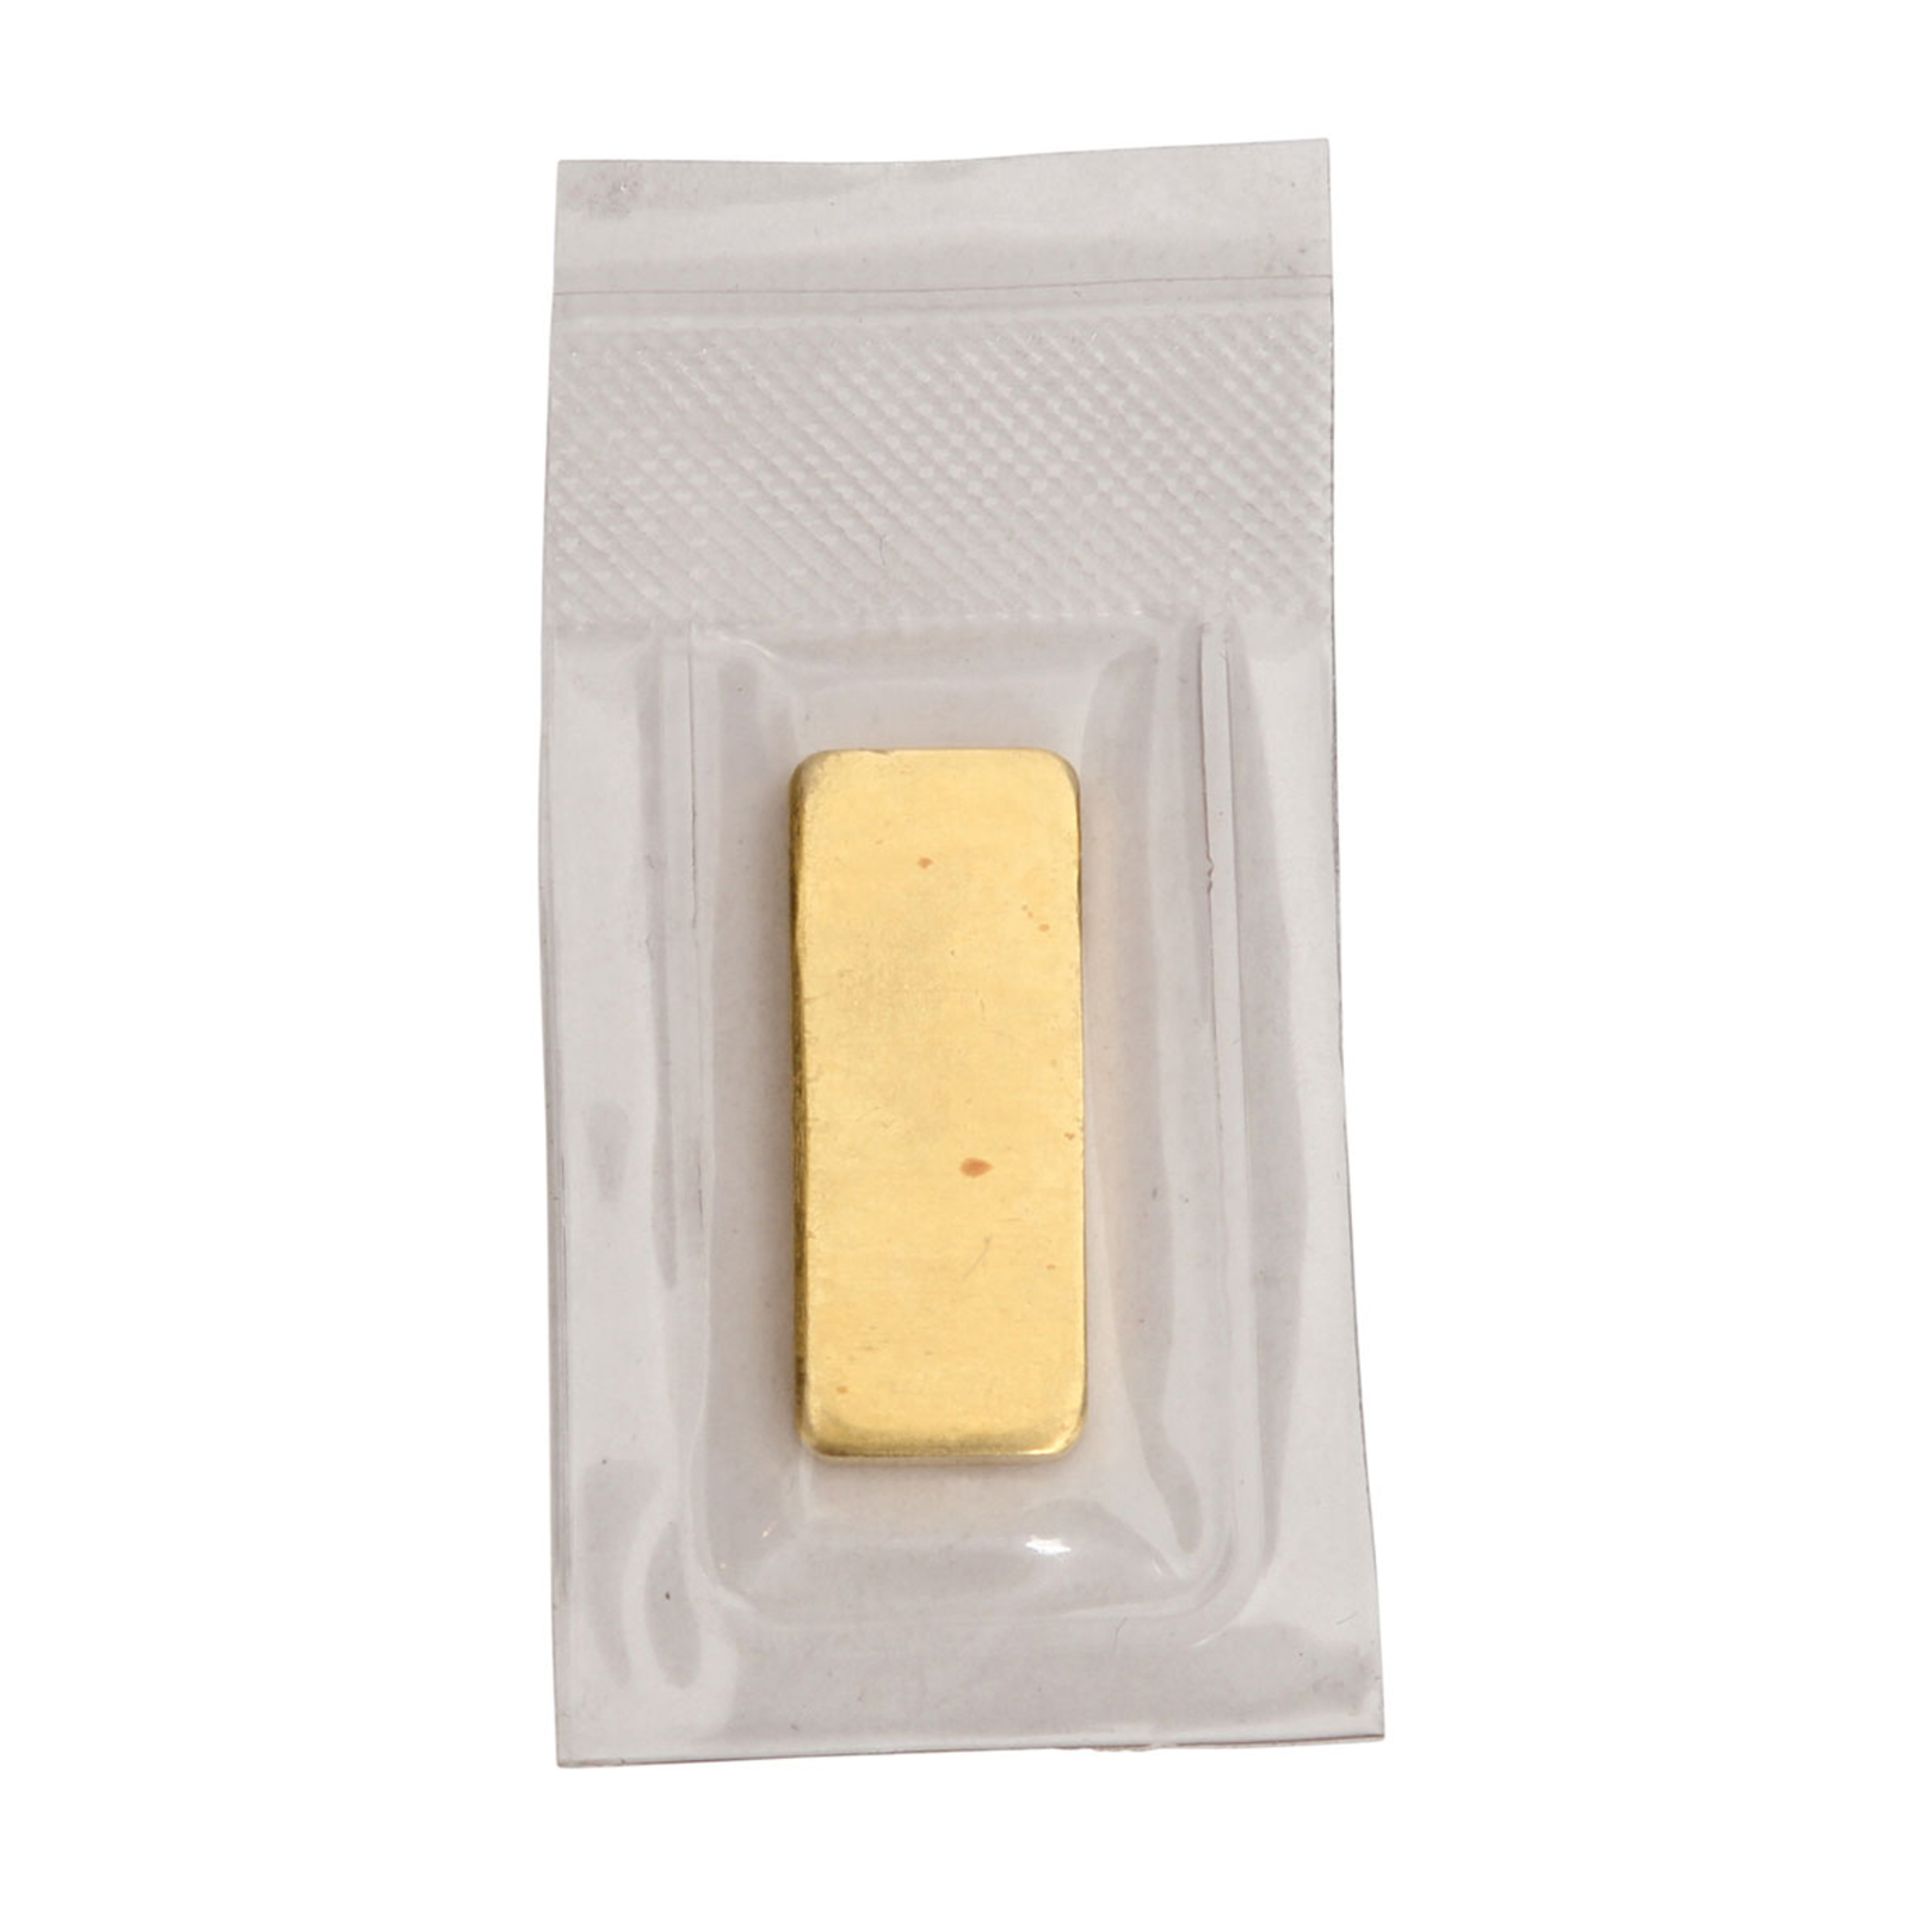 GOLDbarren - 10g GOLD fein, Goldbarren in hist. Form, Hersteller Degussa, geringe Oxidationsflecken, - Bild 2 aus 2